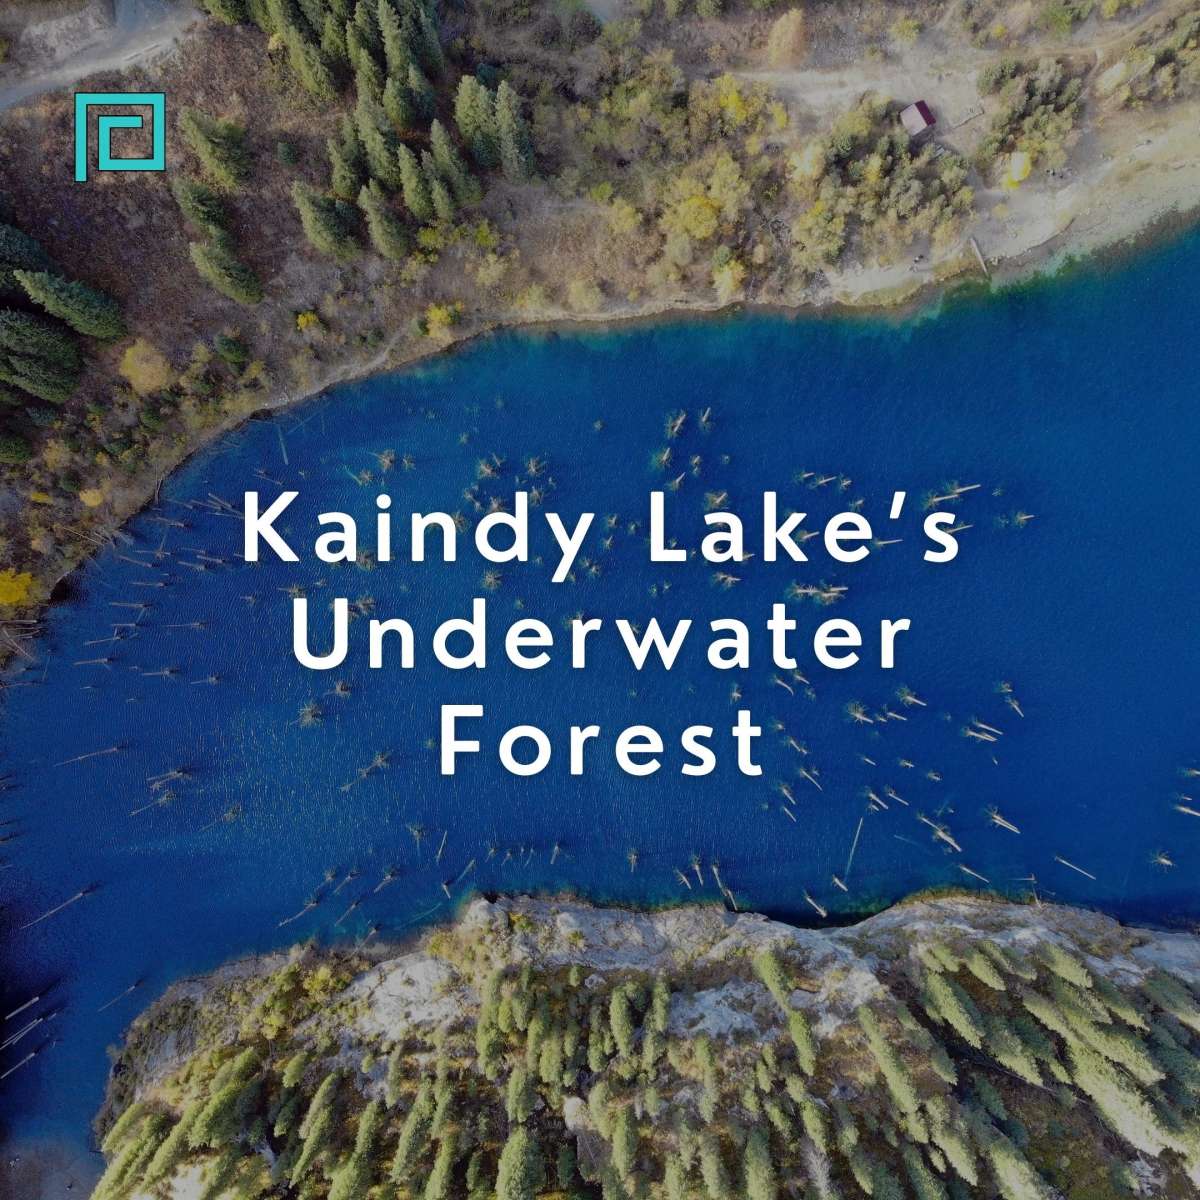 Kaindy Lake’s Underwater Forest